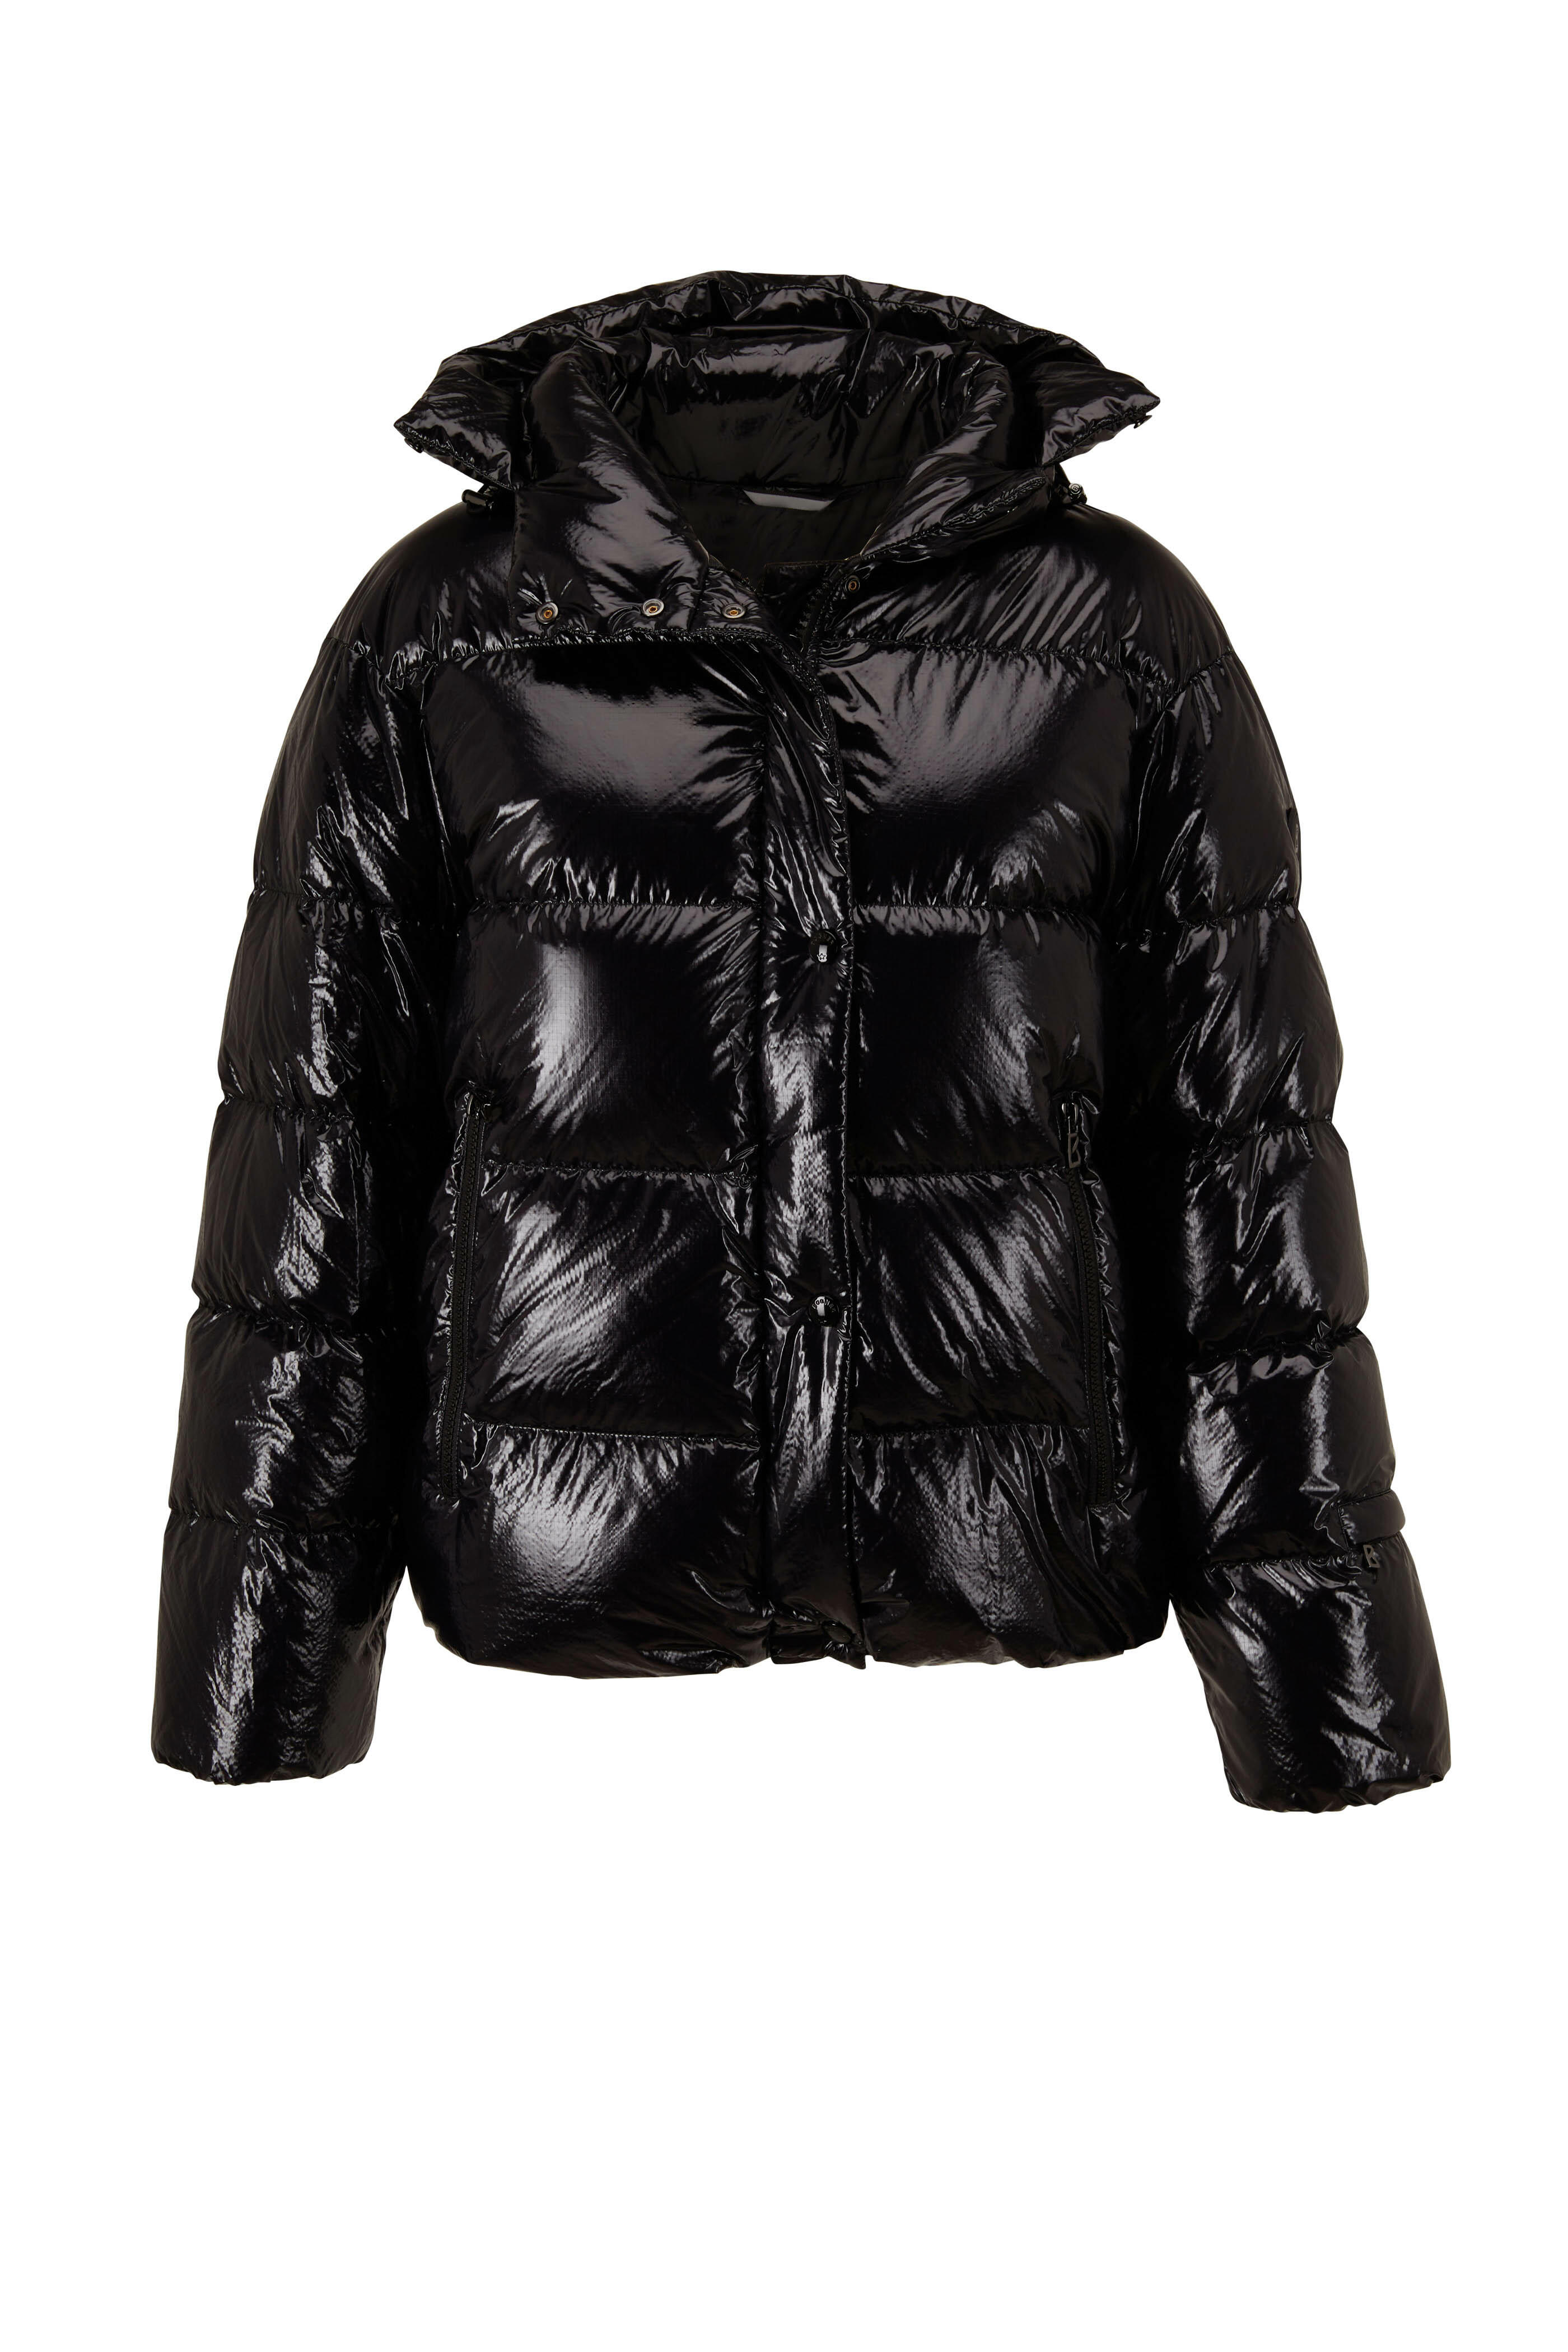 Bogner - Evelia-D High Gloss Black Puffer Jacket